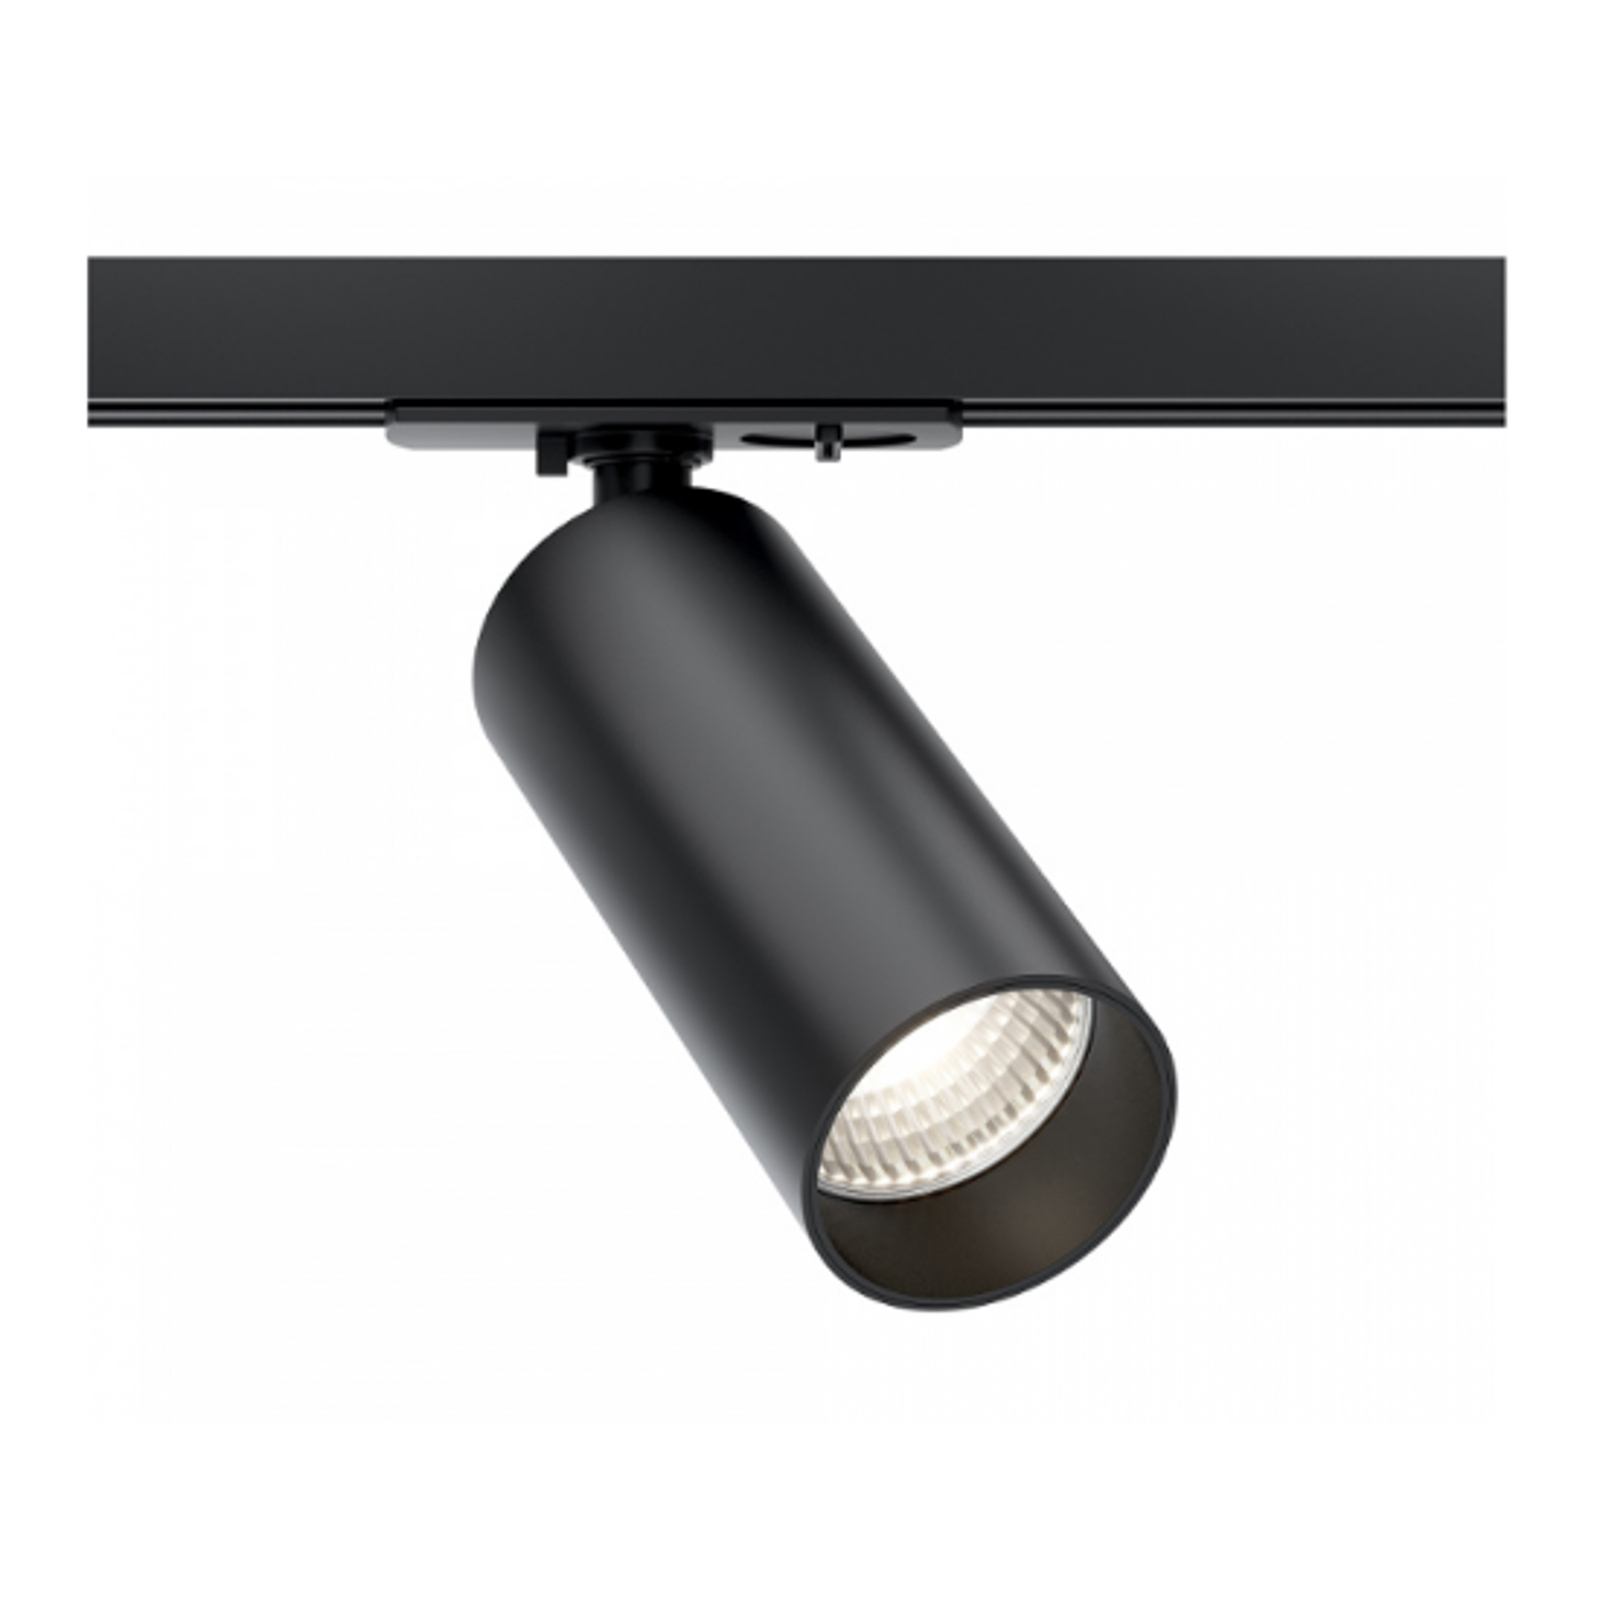 Maytoni Focus spot LED, système Unity, Triac, 940, noir